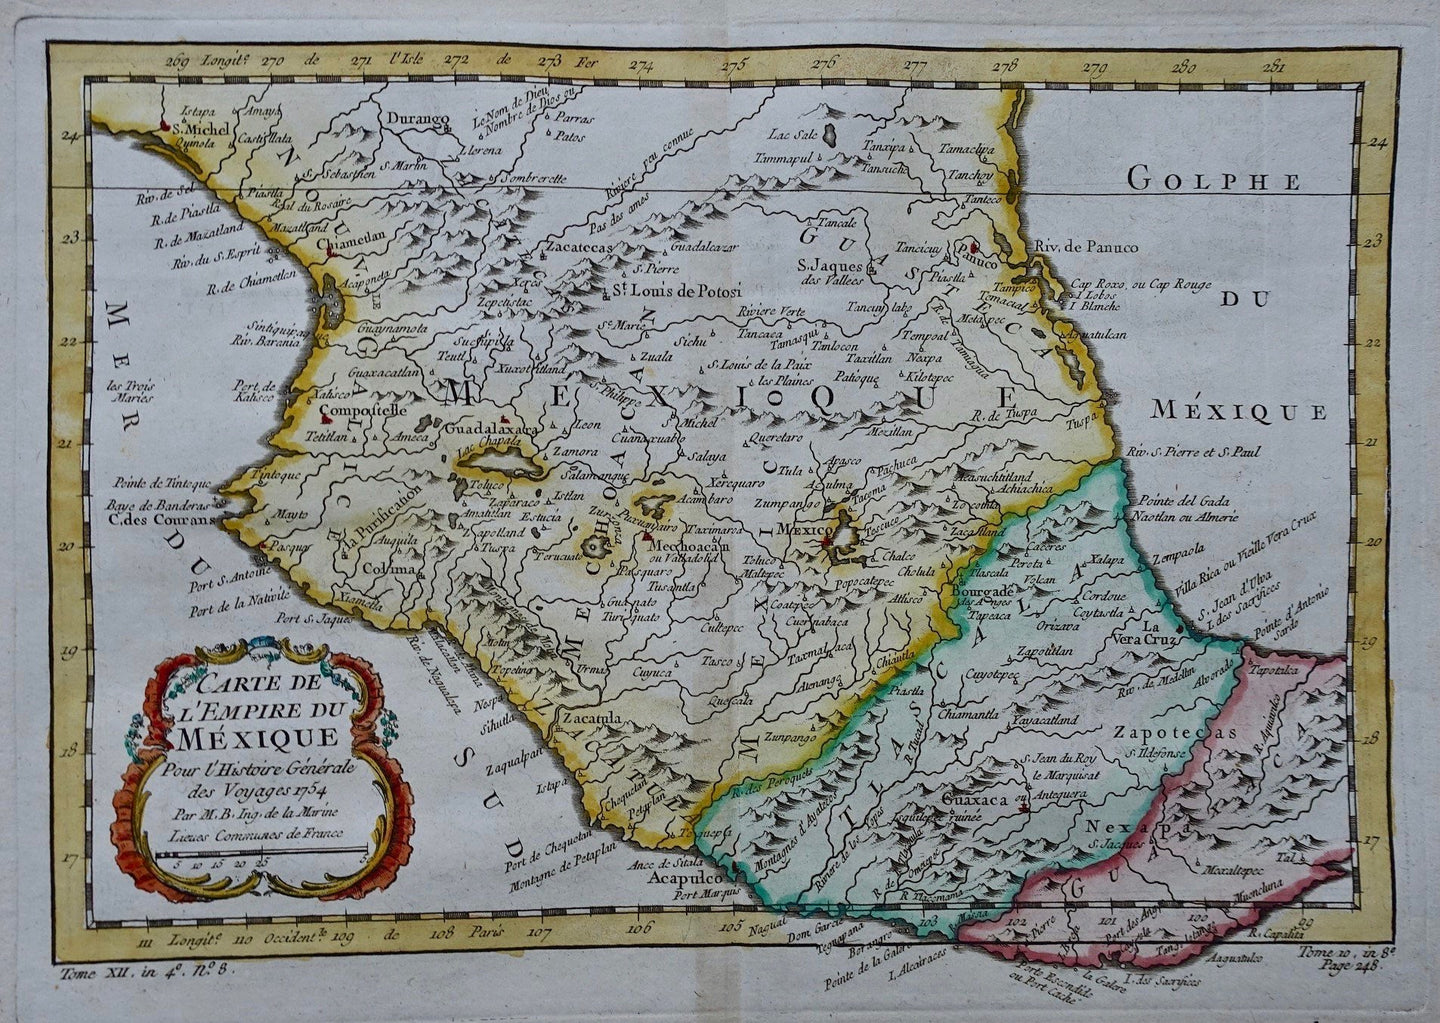 Mexico - JN Bellin - 1758